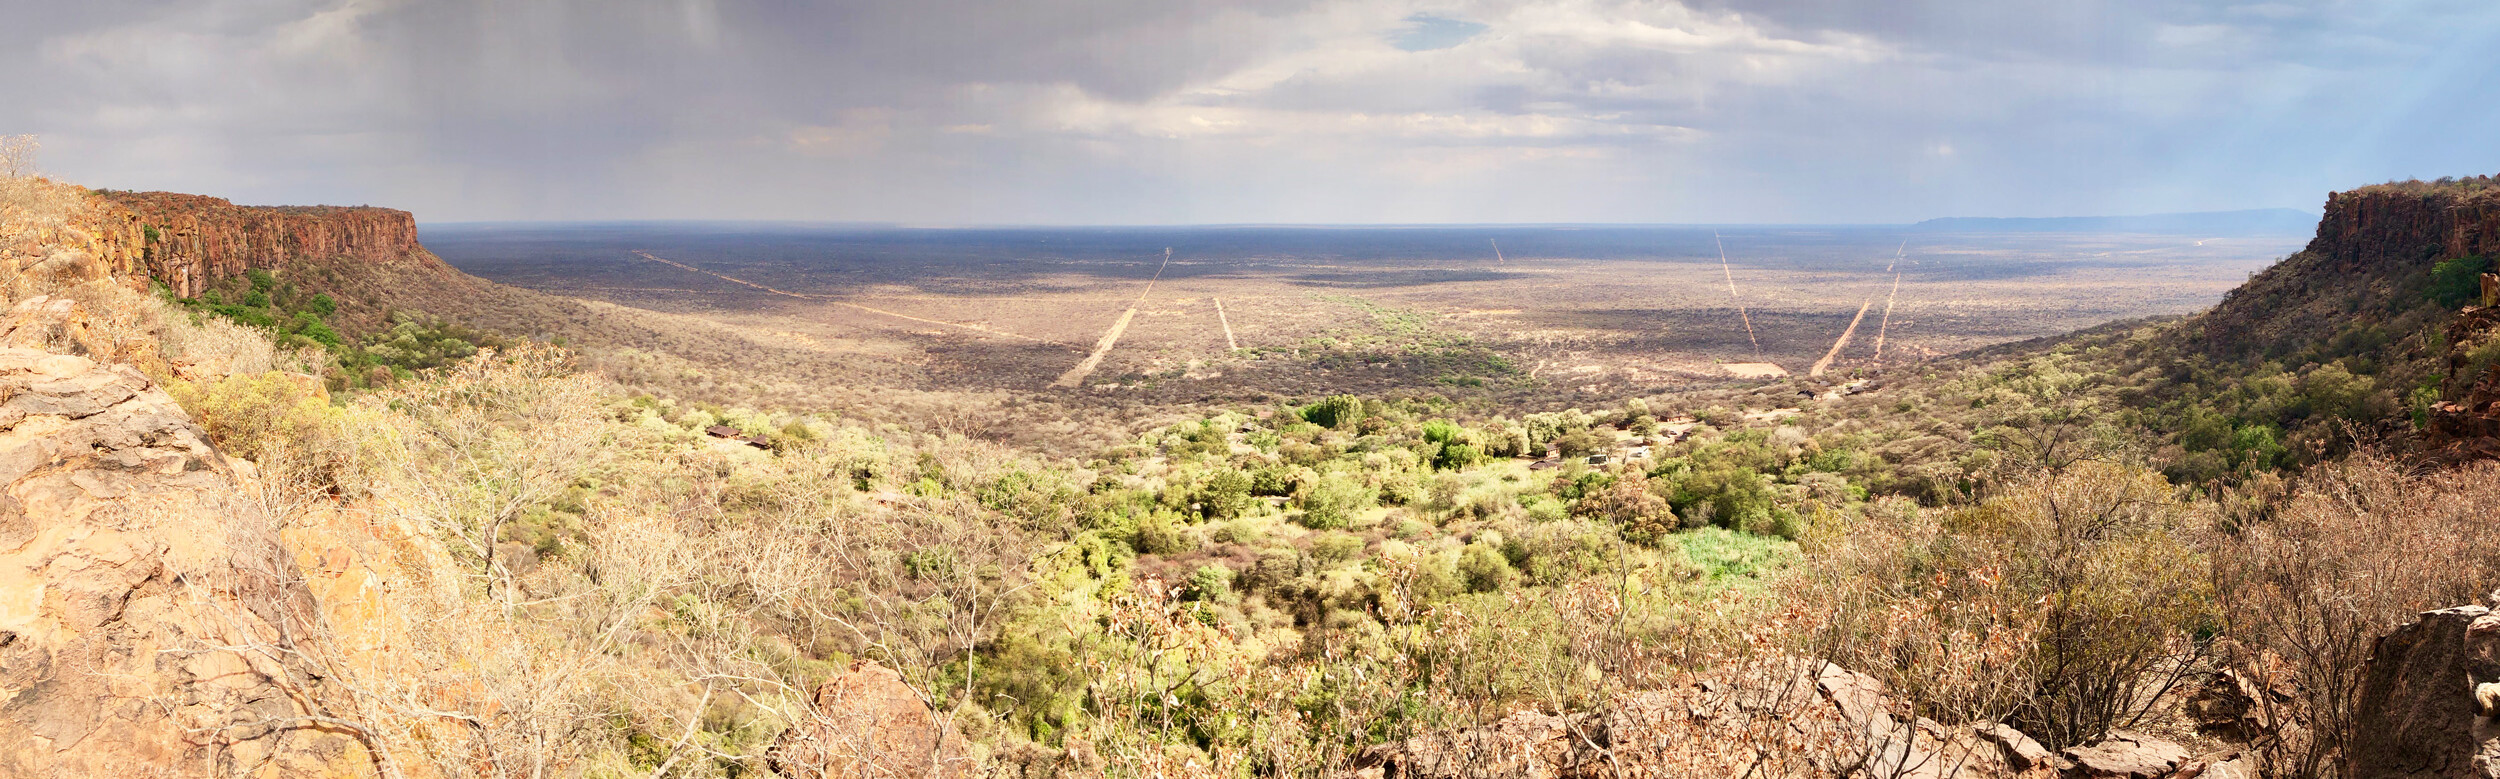 Namibia Reisebericht - Waterberg Plateau